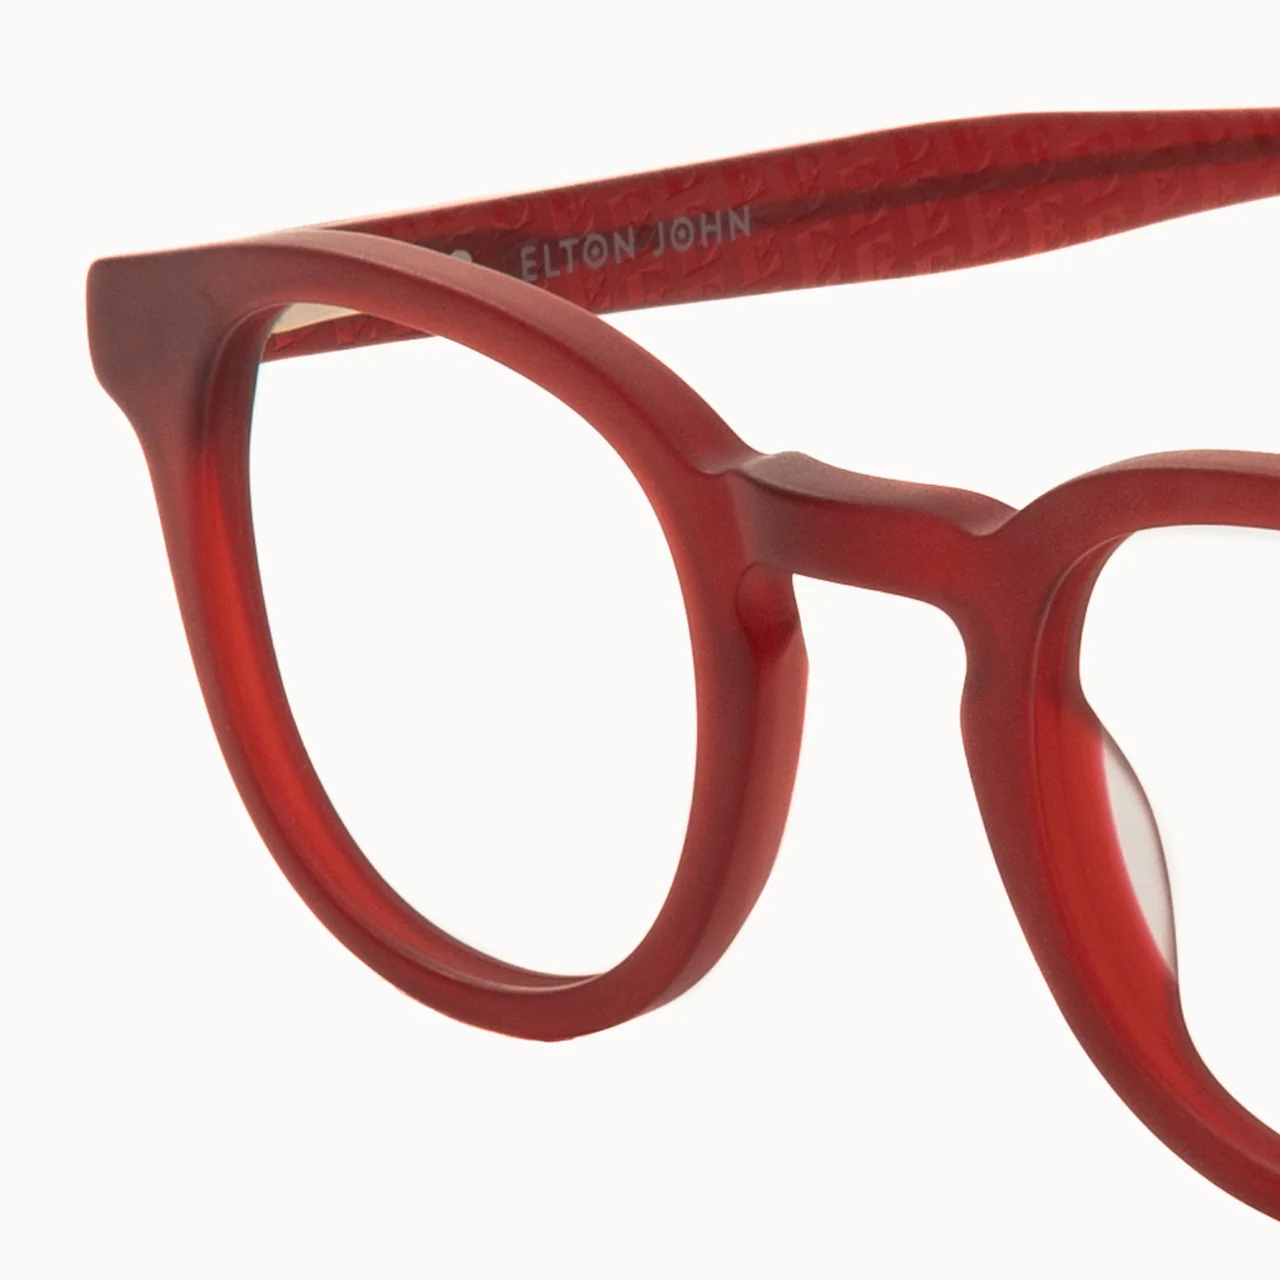 Red Elton John Eyewear glasses with clear prescription lenses